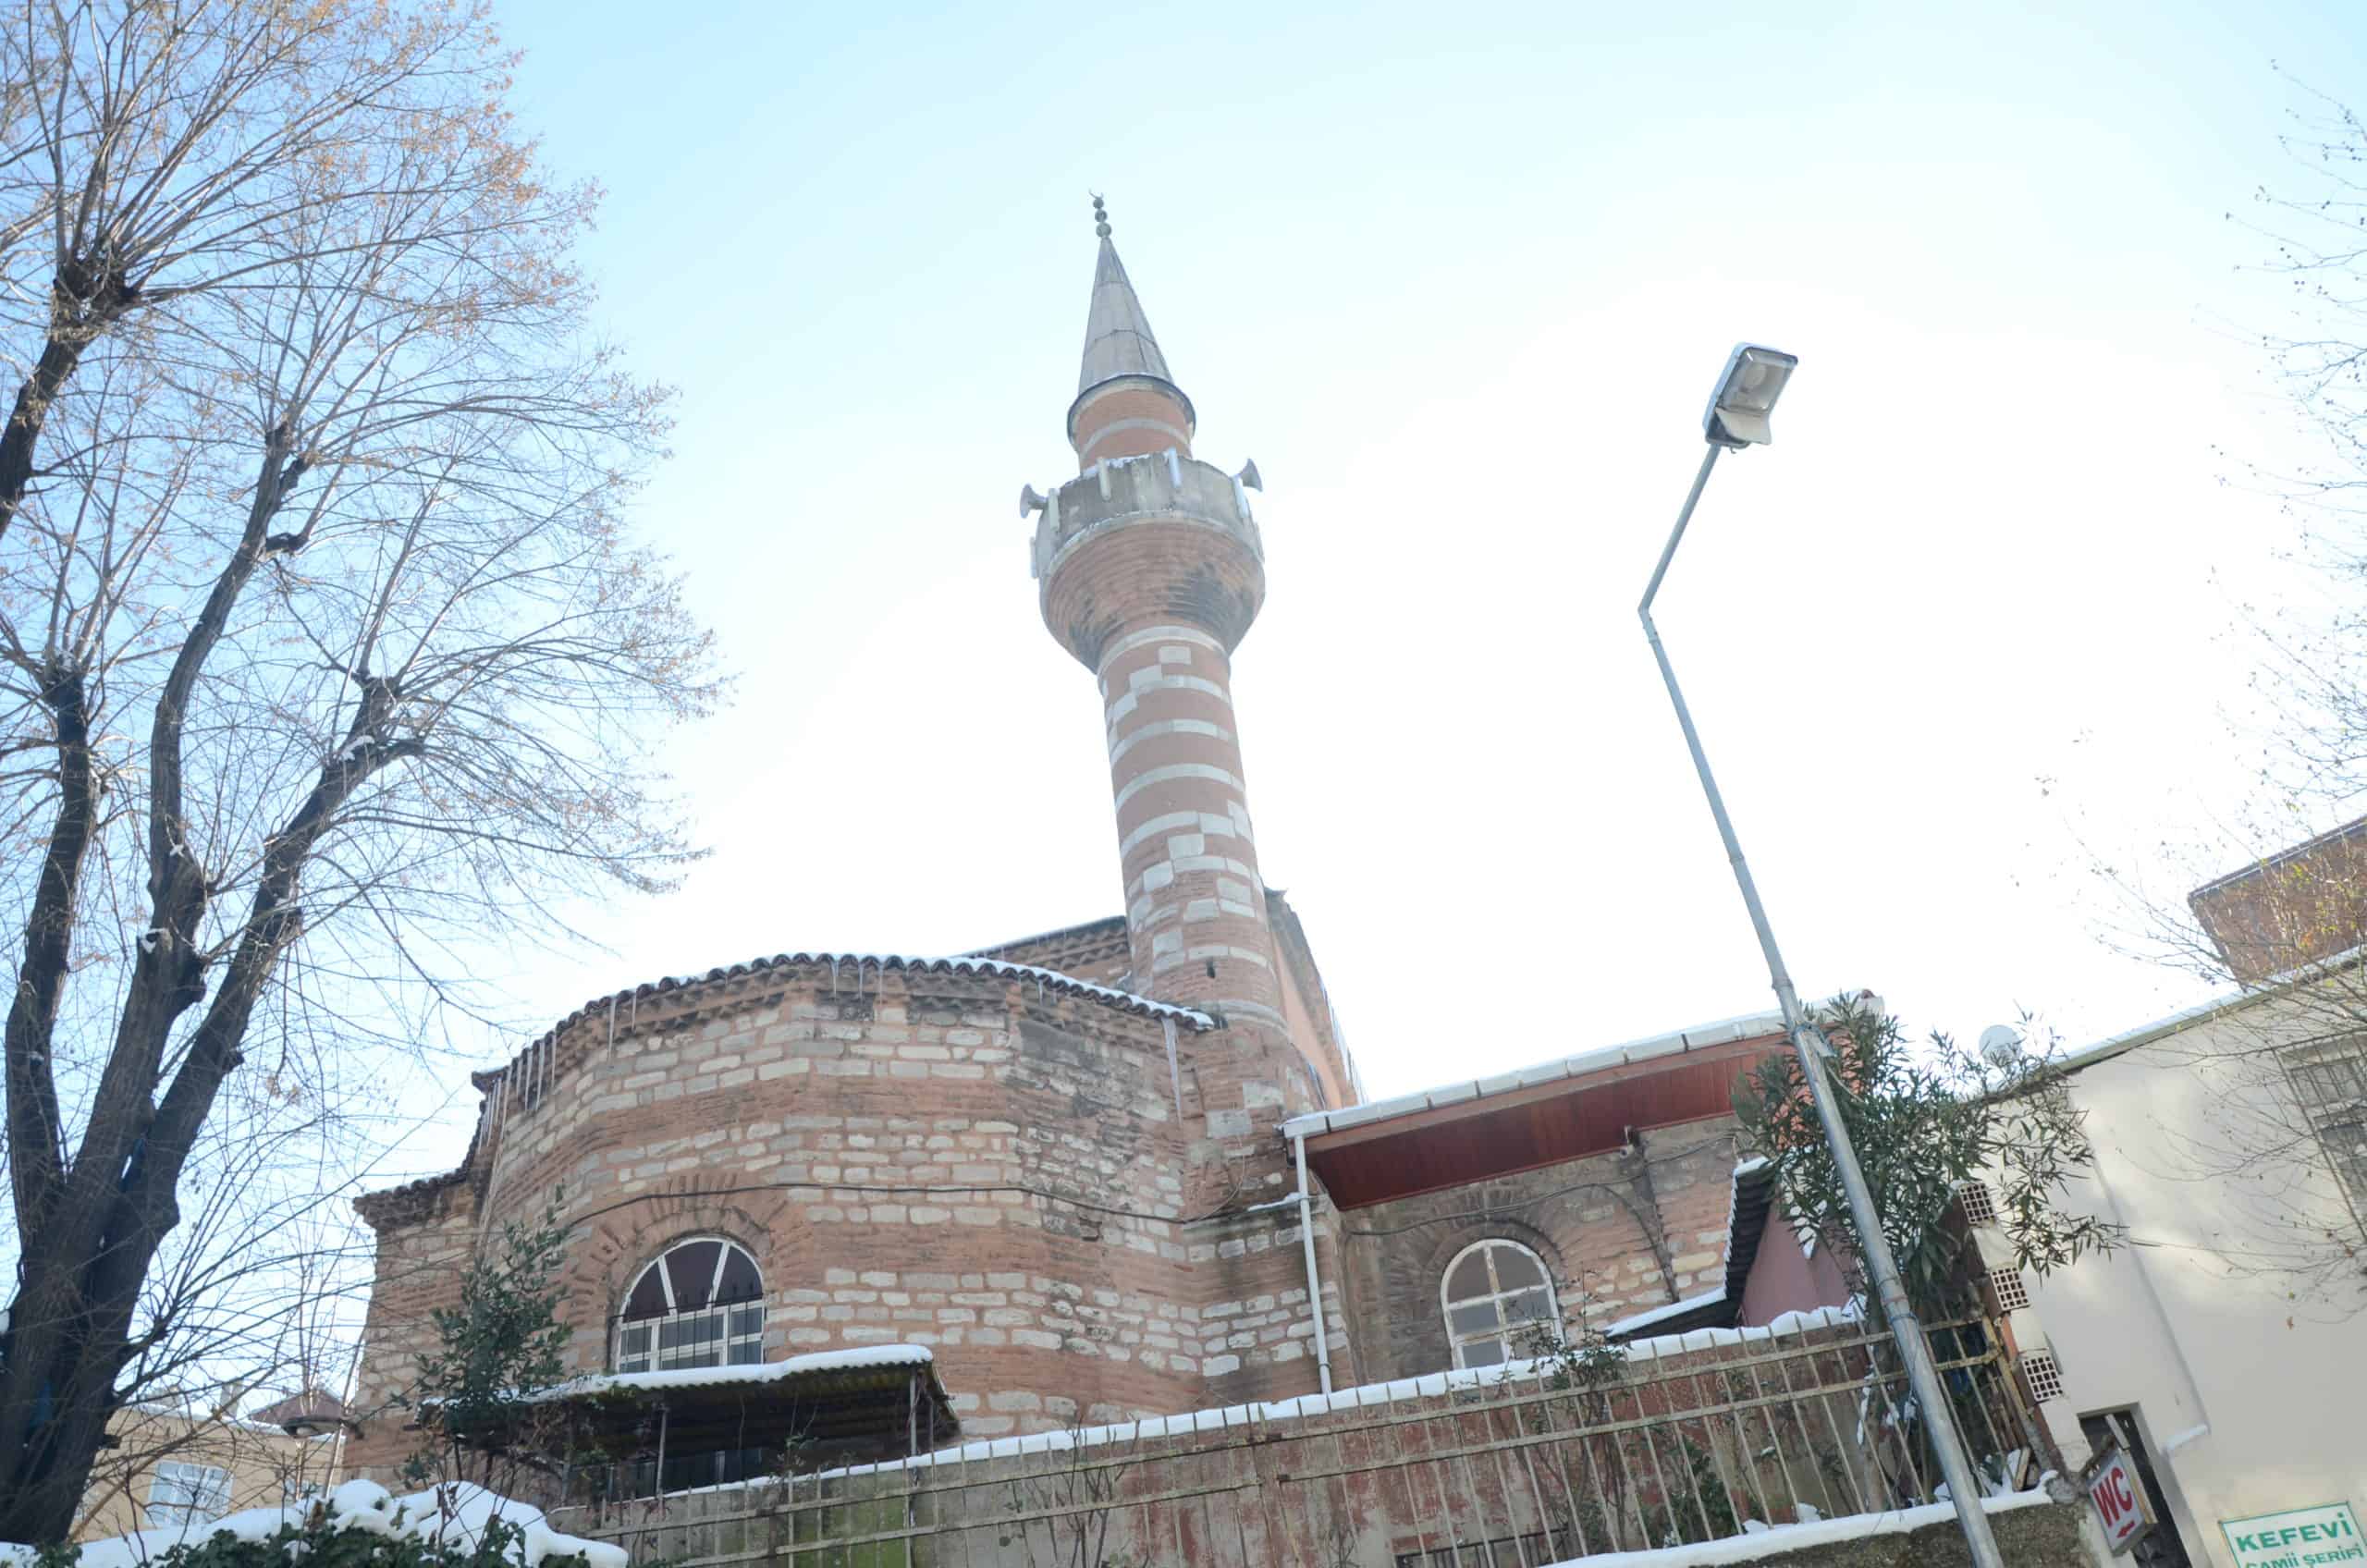 Kefeli Mosque in Fatih, Istanbul, Turkey